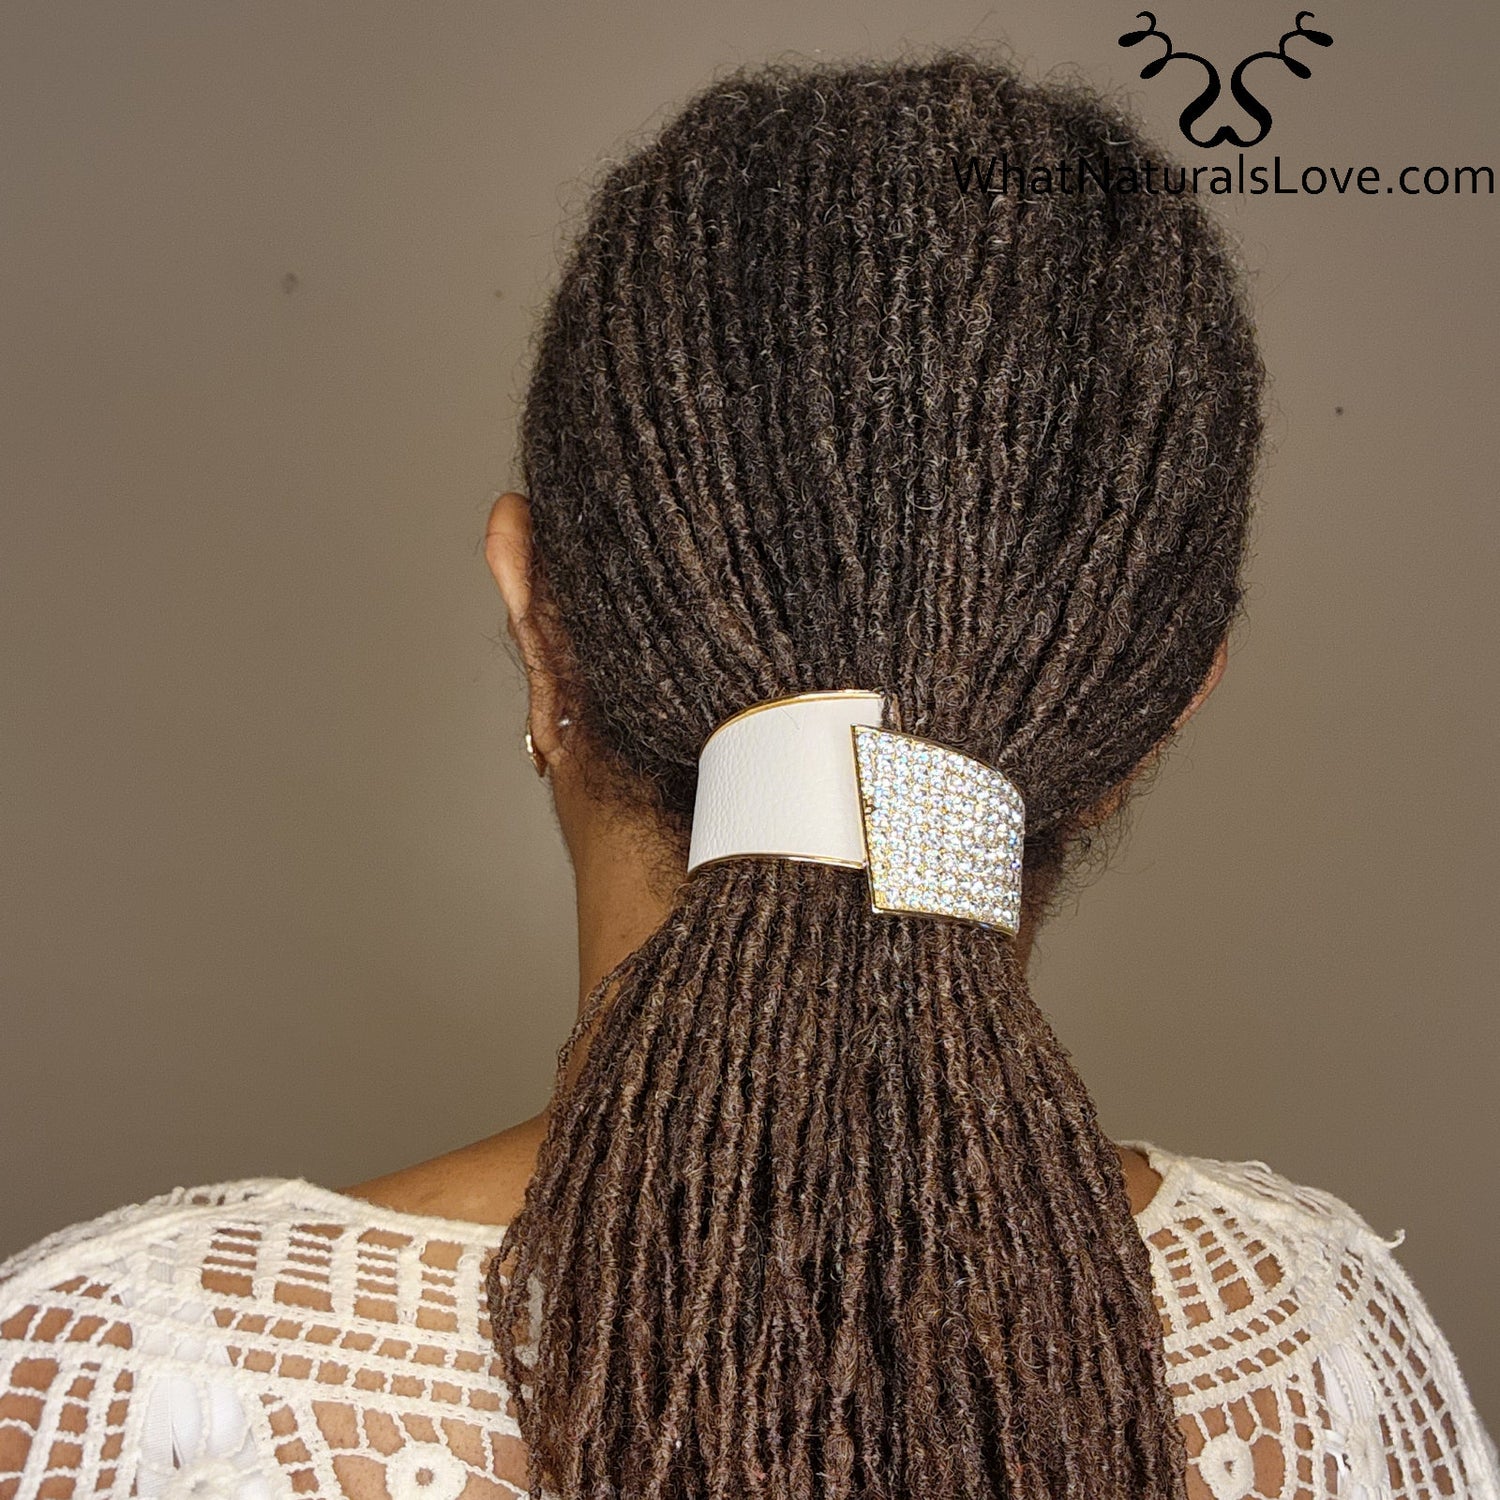 Hair Cuff with Rhinestones for Locs, Dreadlocks, Braids and curls